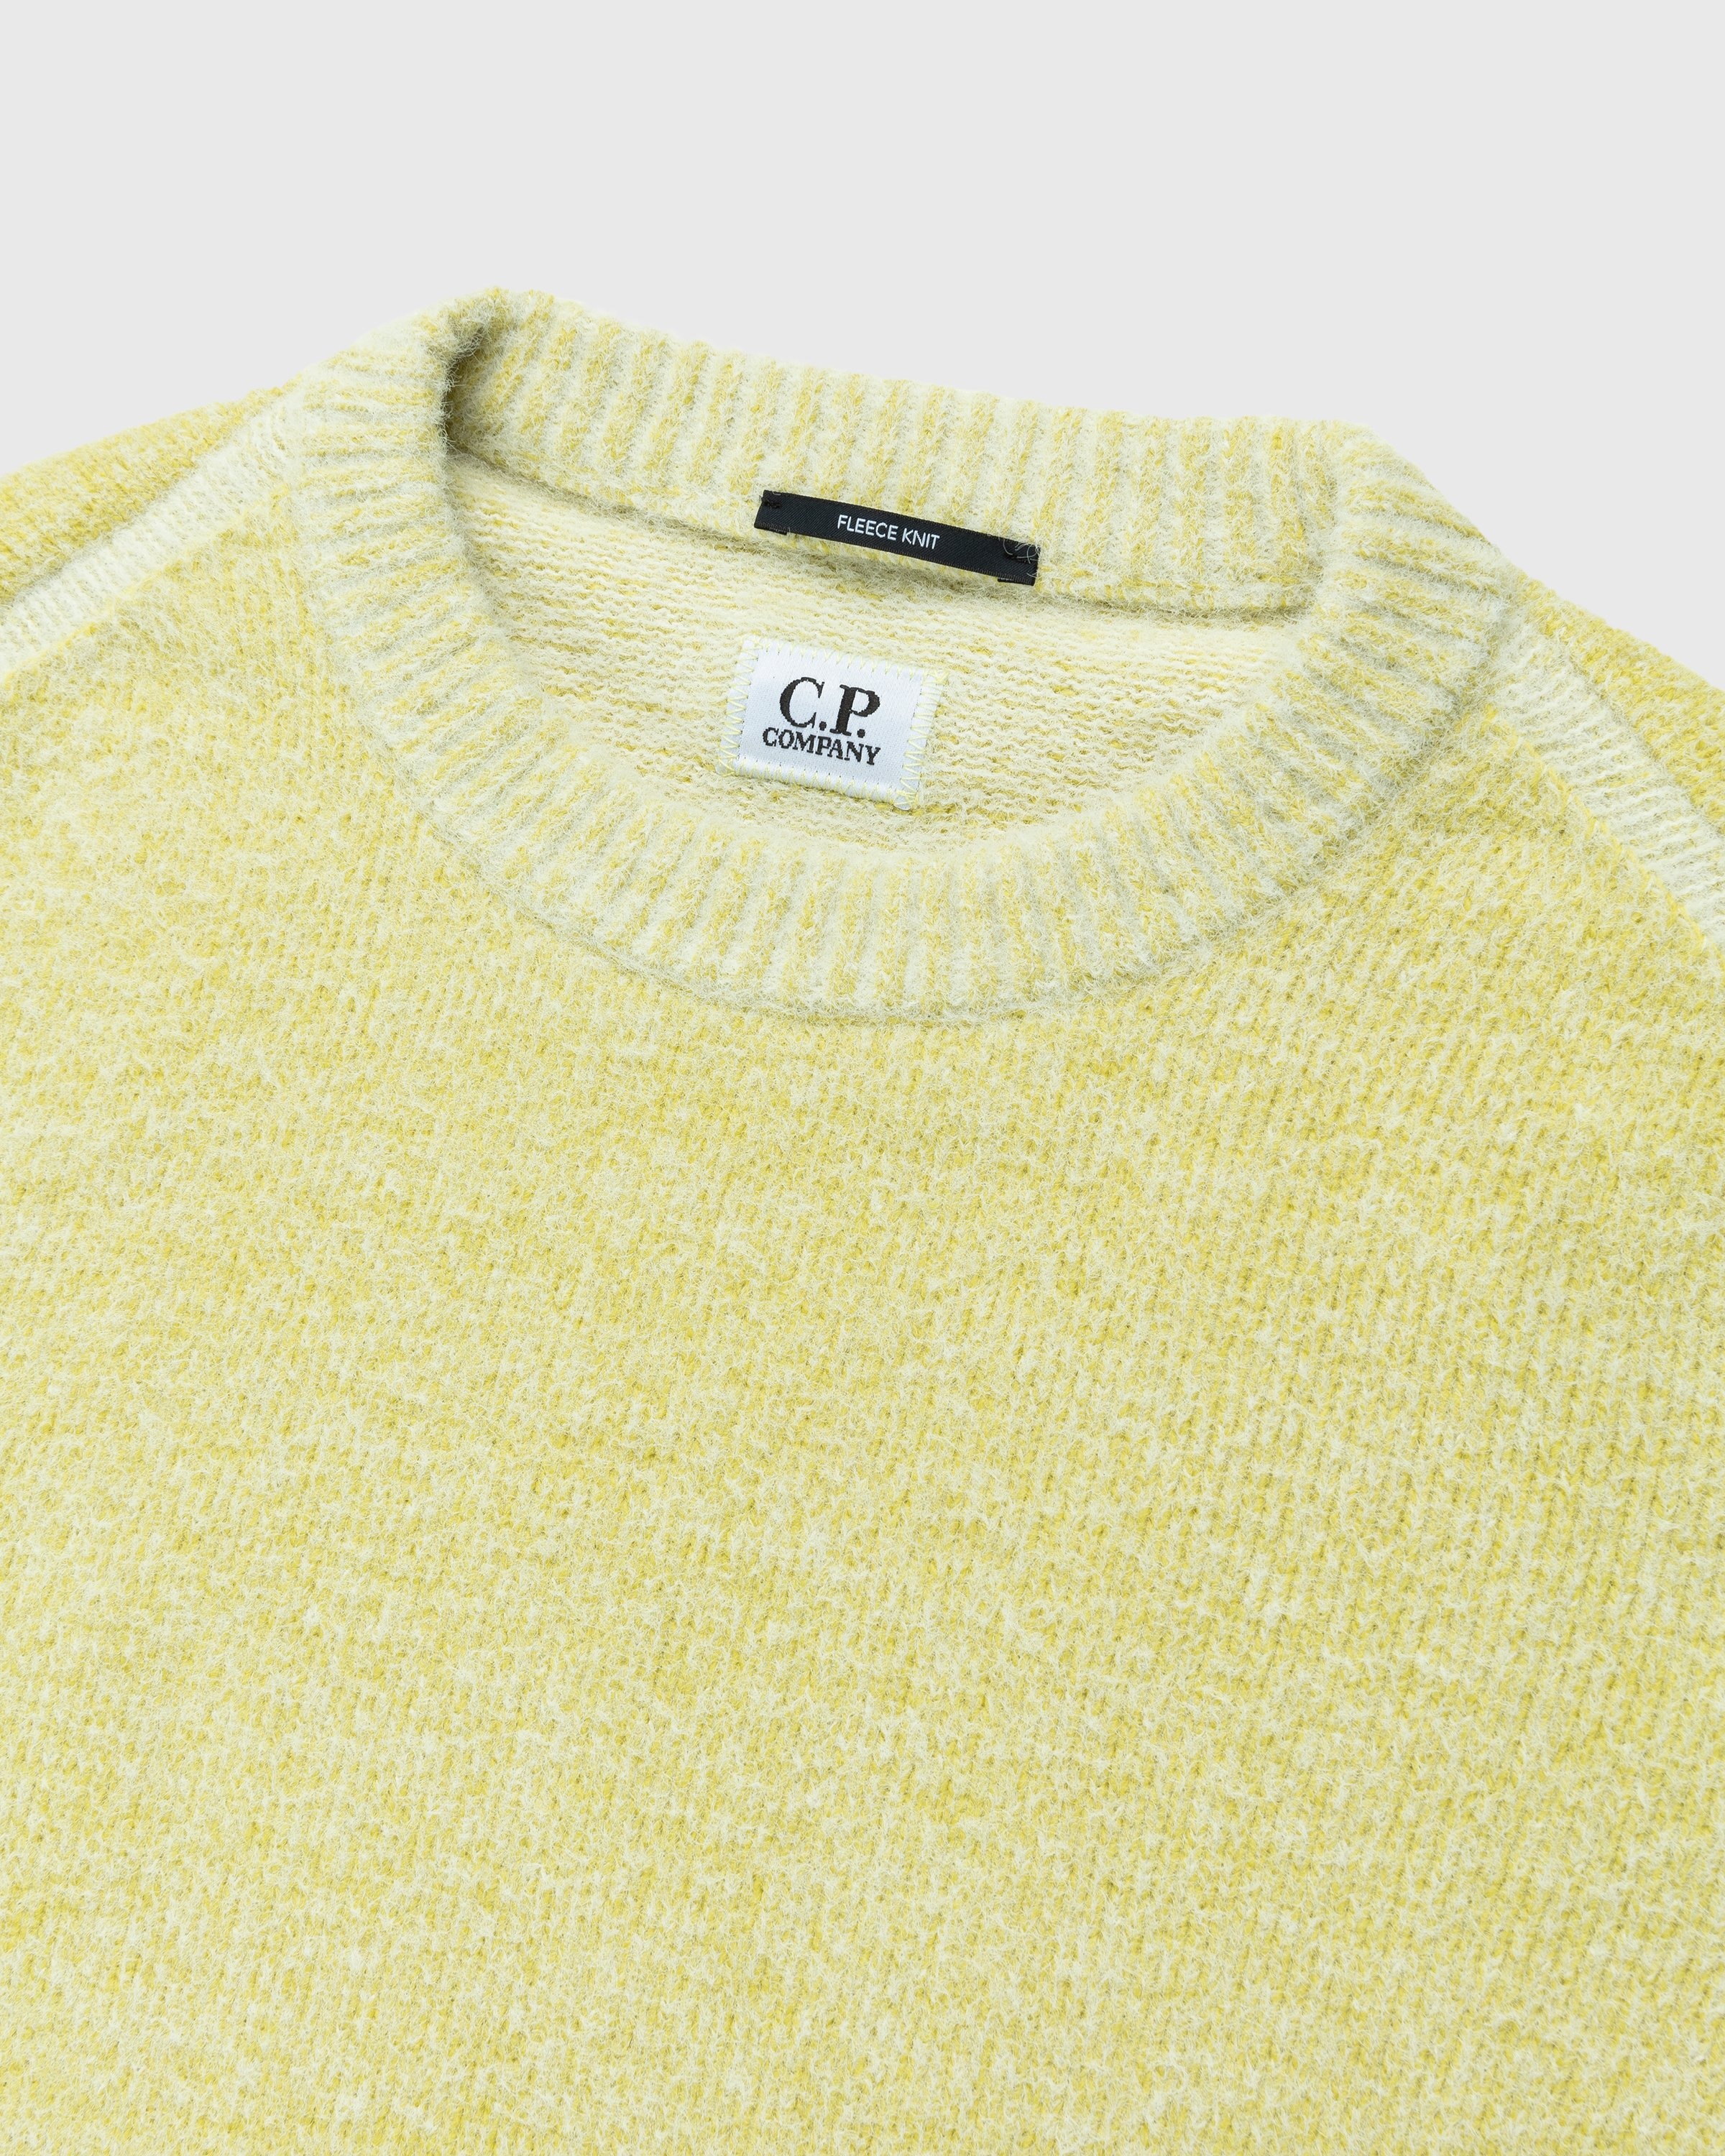 C.P. Company – Fleece Knit Jumper Yellow - Knitwear - Yellow - Image 3